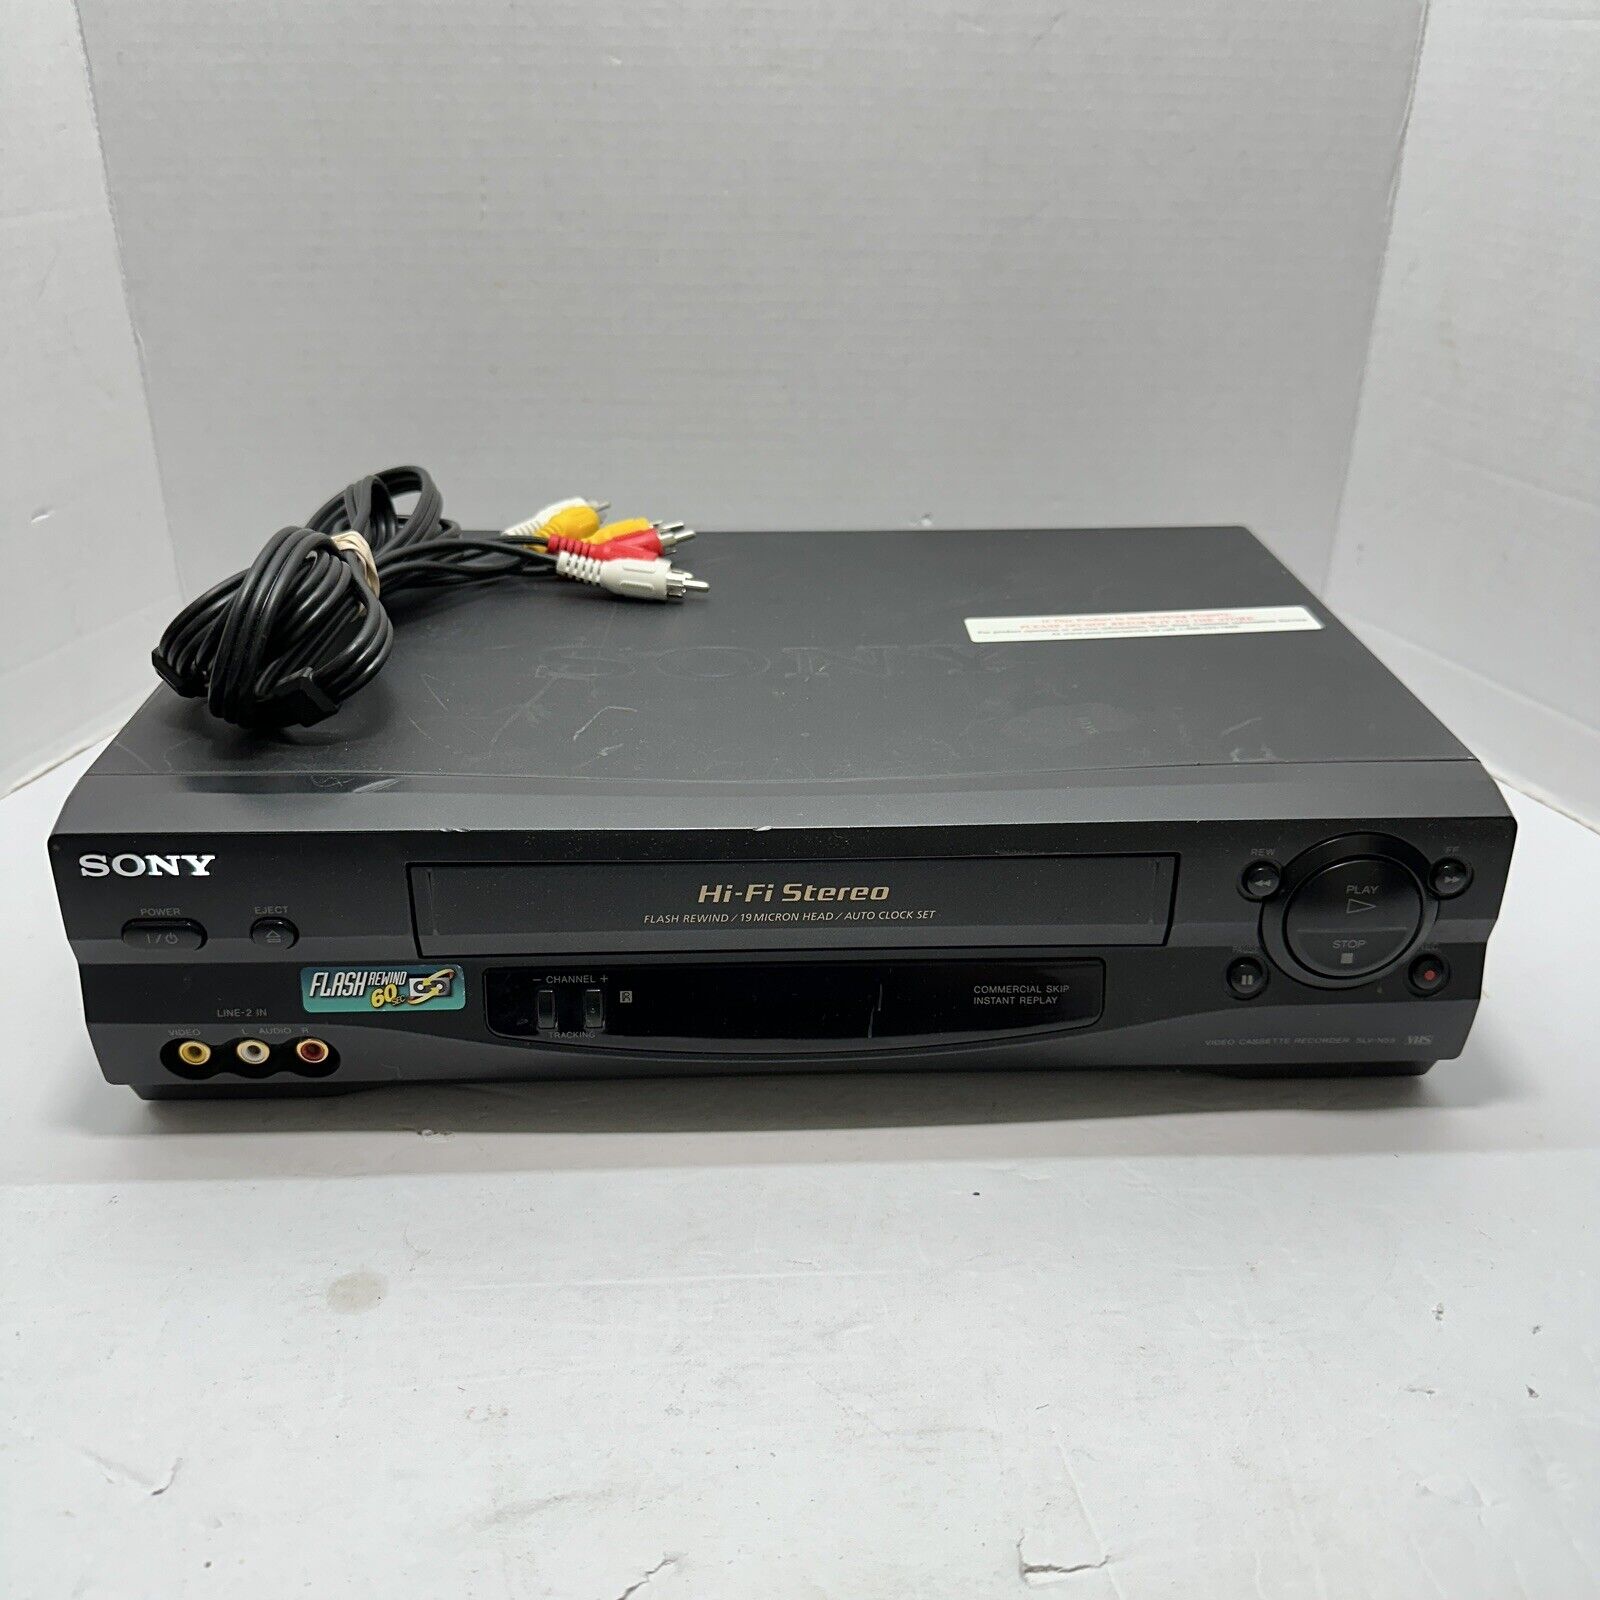 Sony VCR SLV-N55 Hi-Fi Stereo 4-Head Flash VCR VHS Player Recorder *No Remote*